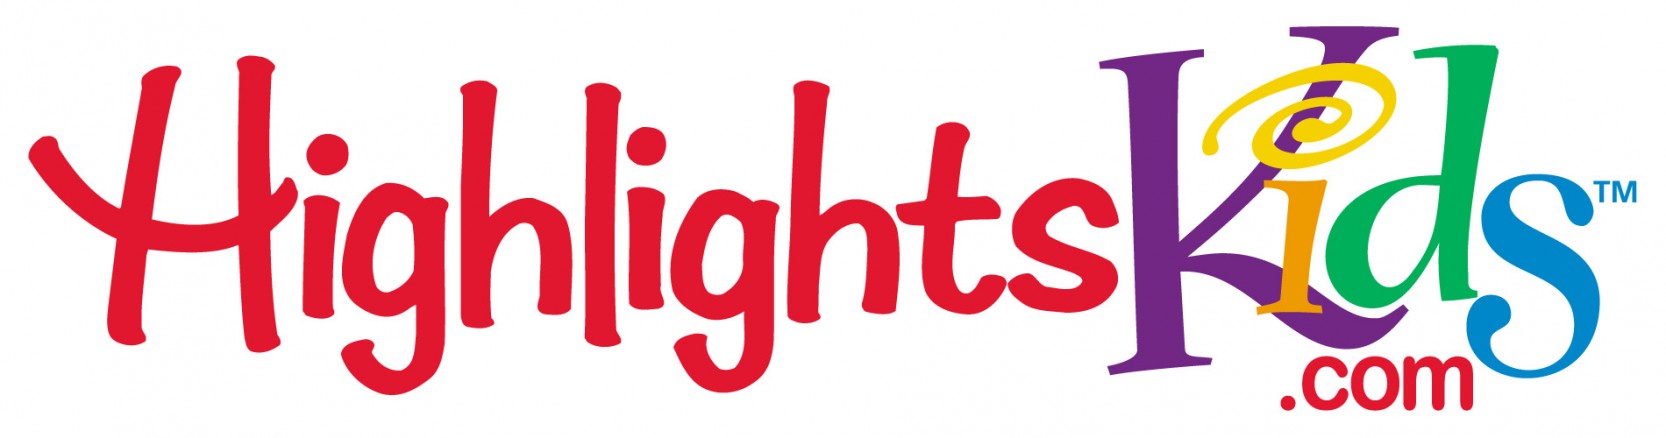 10.HighlightsKids_Logo